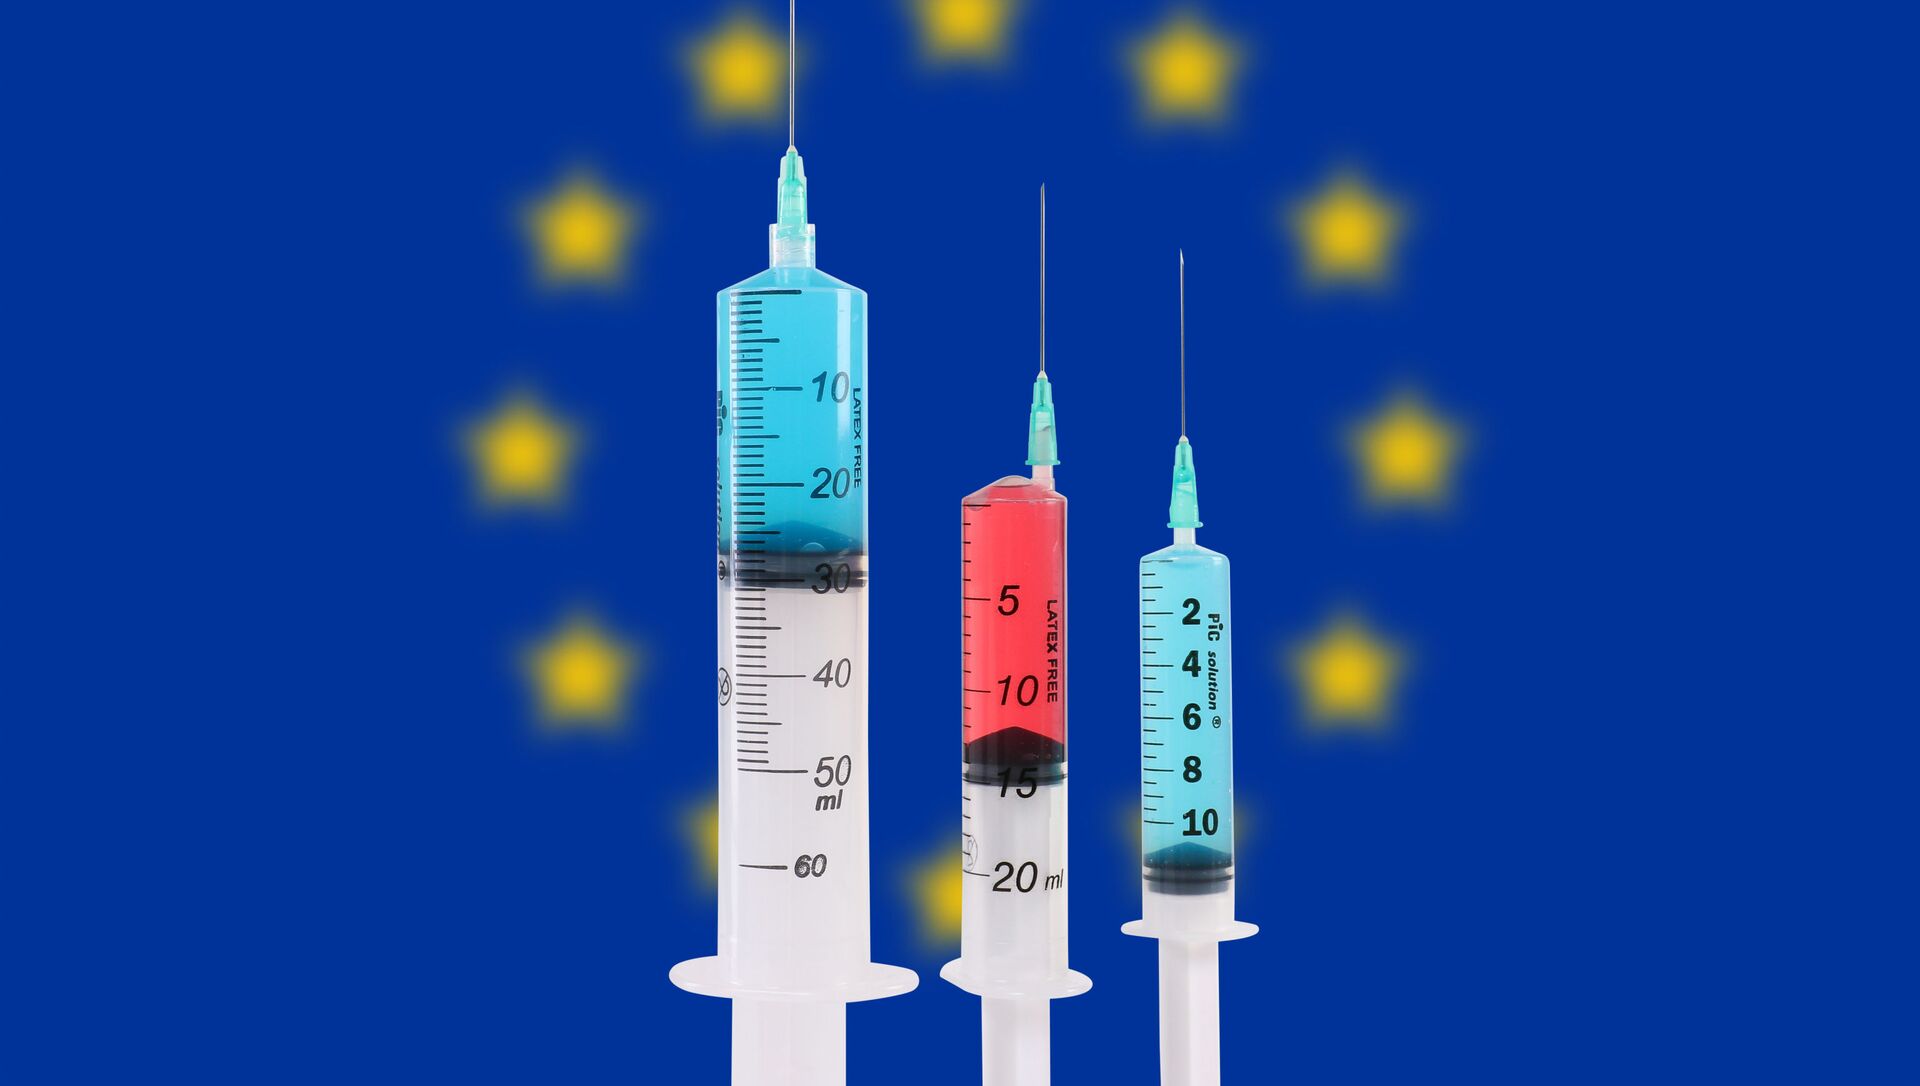 Campagne de vaccination en Europe (image d'illustration) - Sputnik Afrique, 1920, 08.03.2021